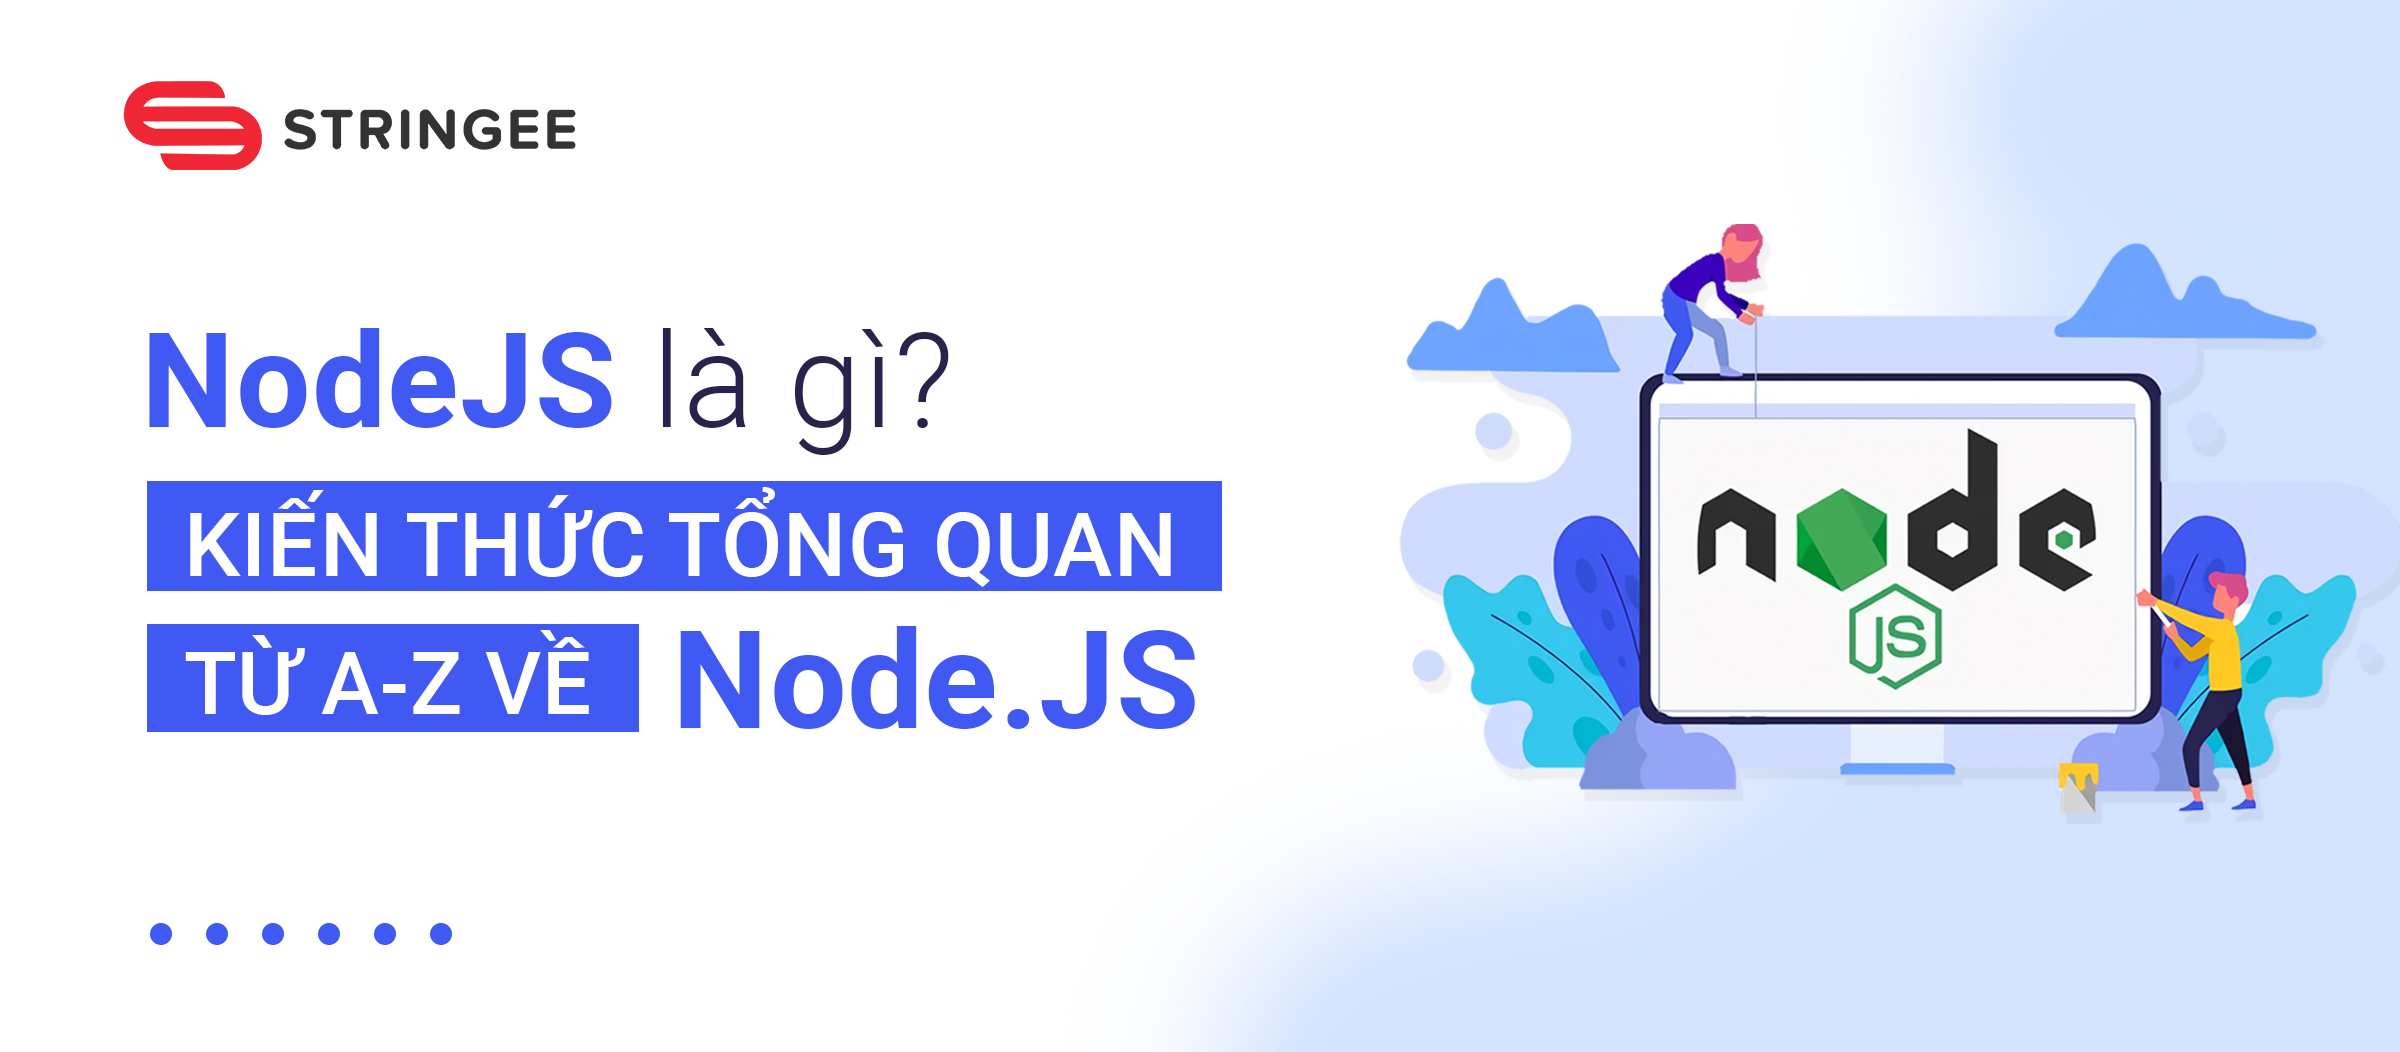 Node.js là gì? Kiến thức tổng quan từ A-Z về Node.js